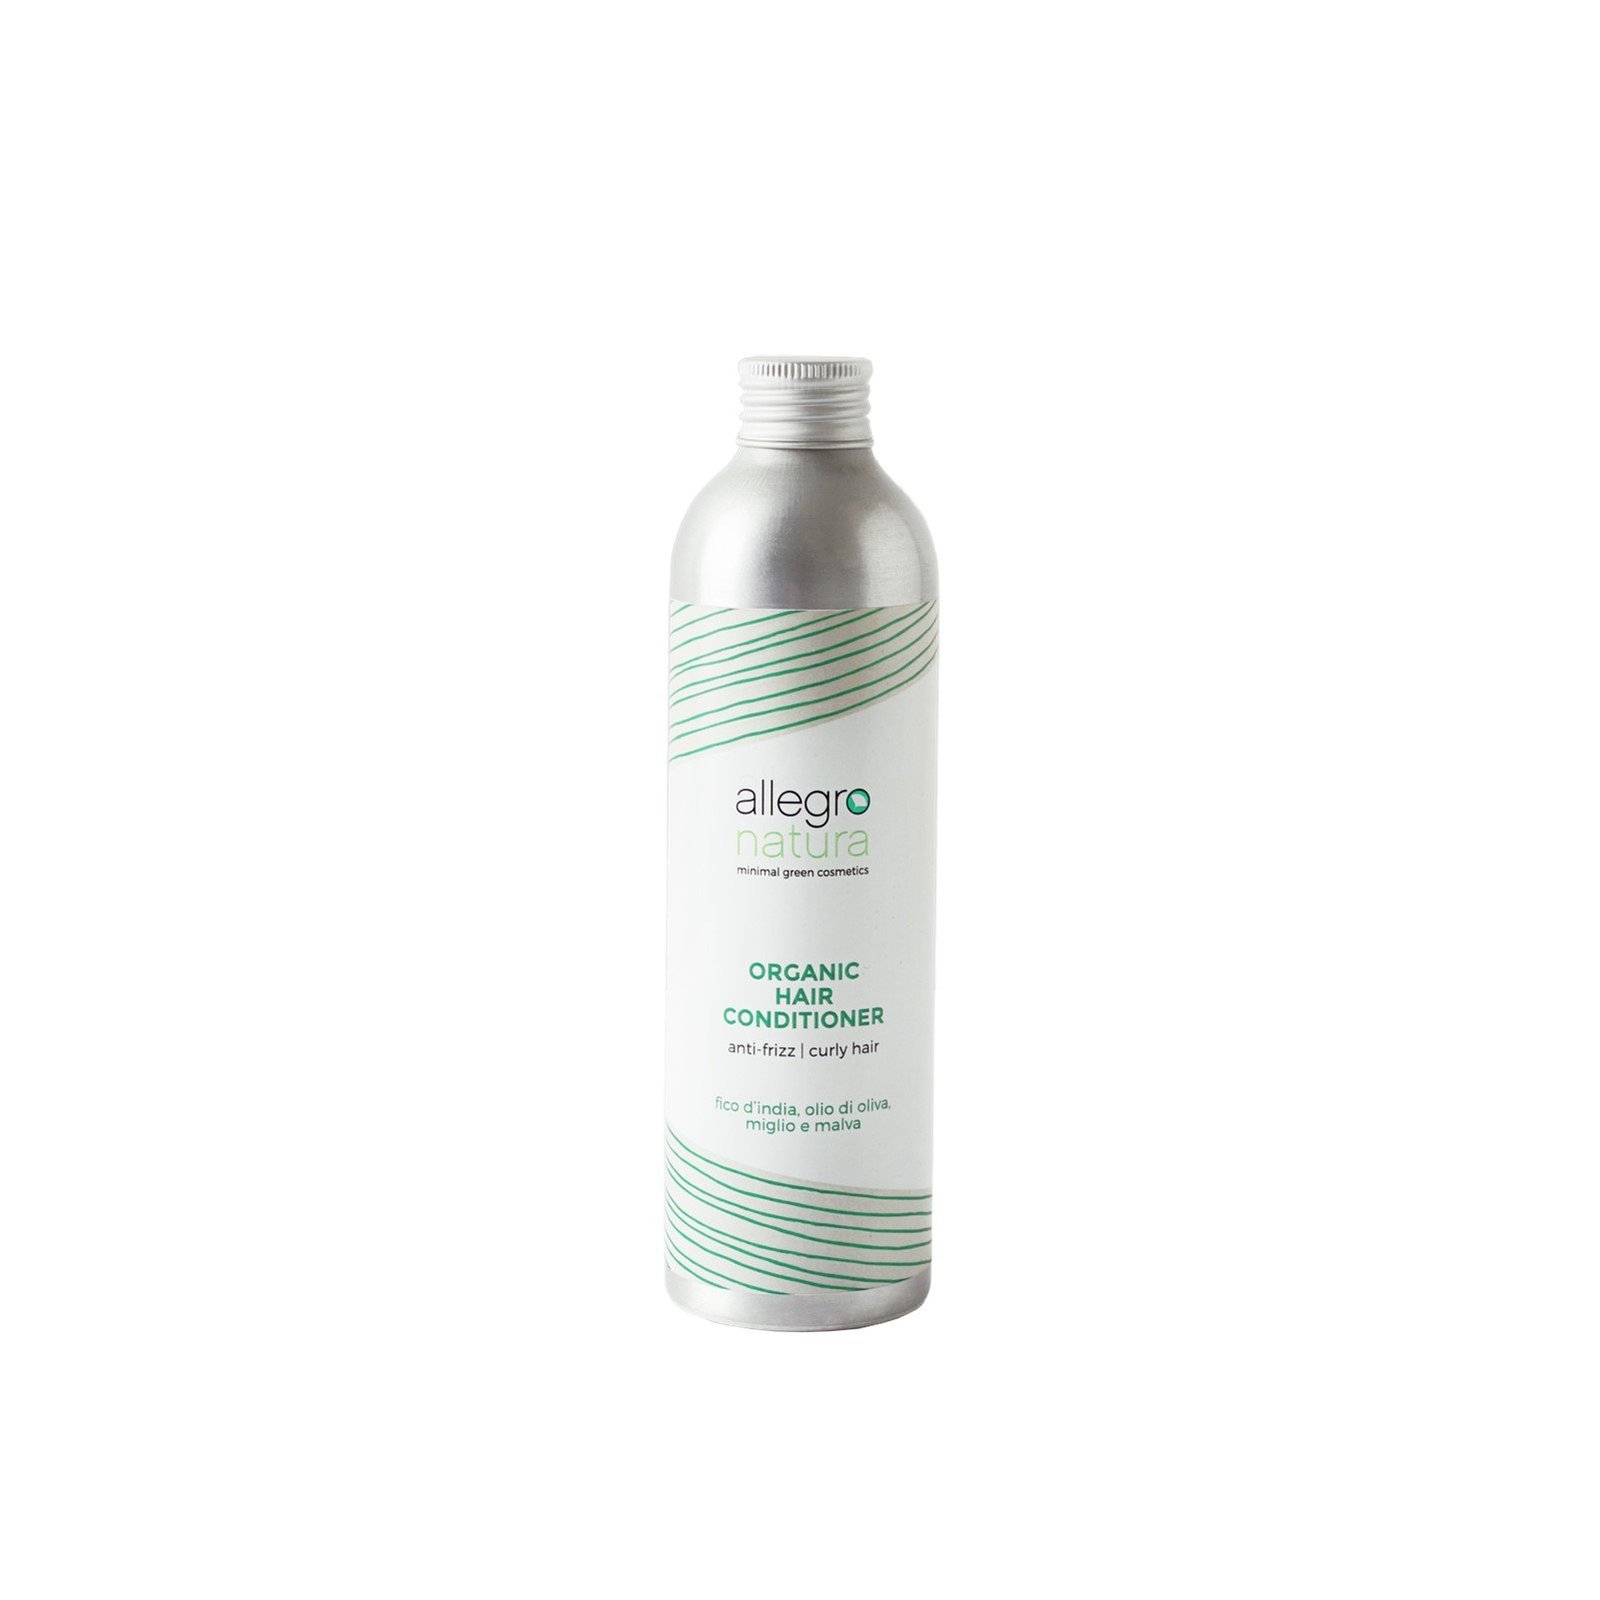 Allegro Natura Organic Hair Conditioner Anti-Frizz And Curly Hair 200ml (6.76 fl oz)